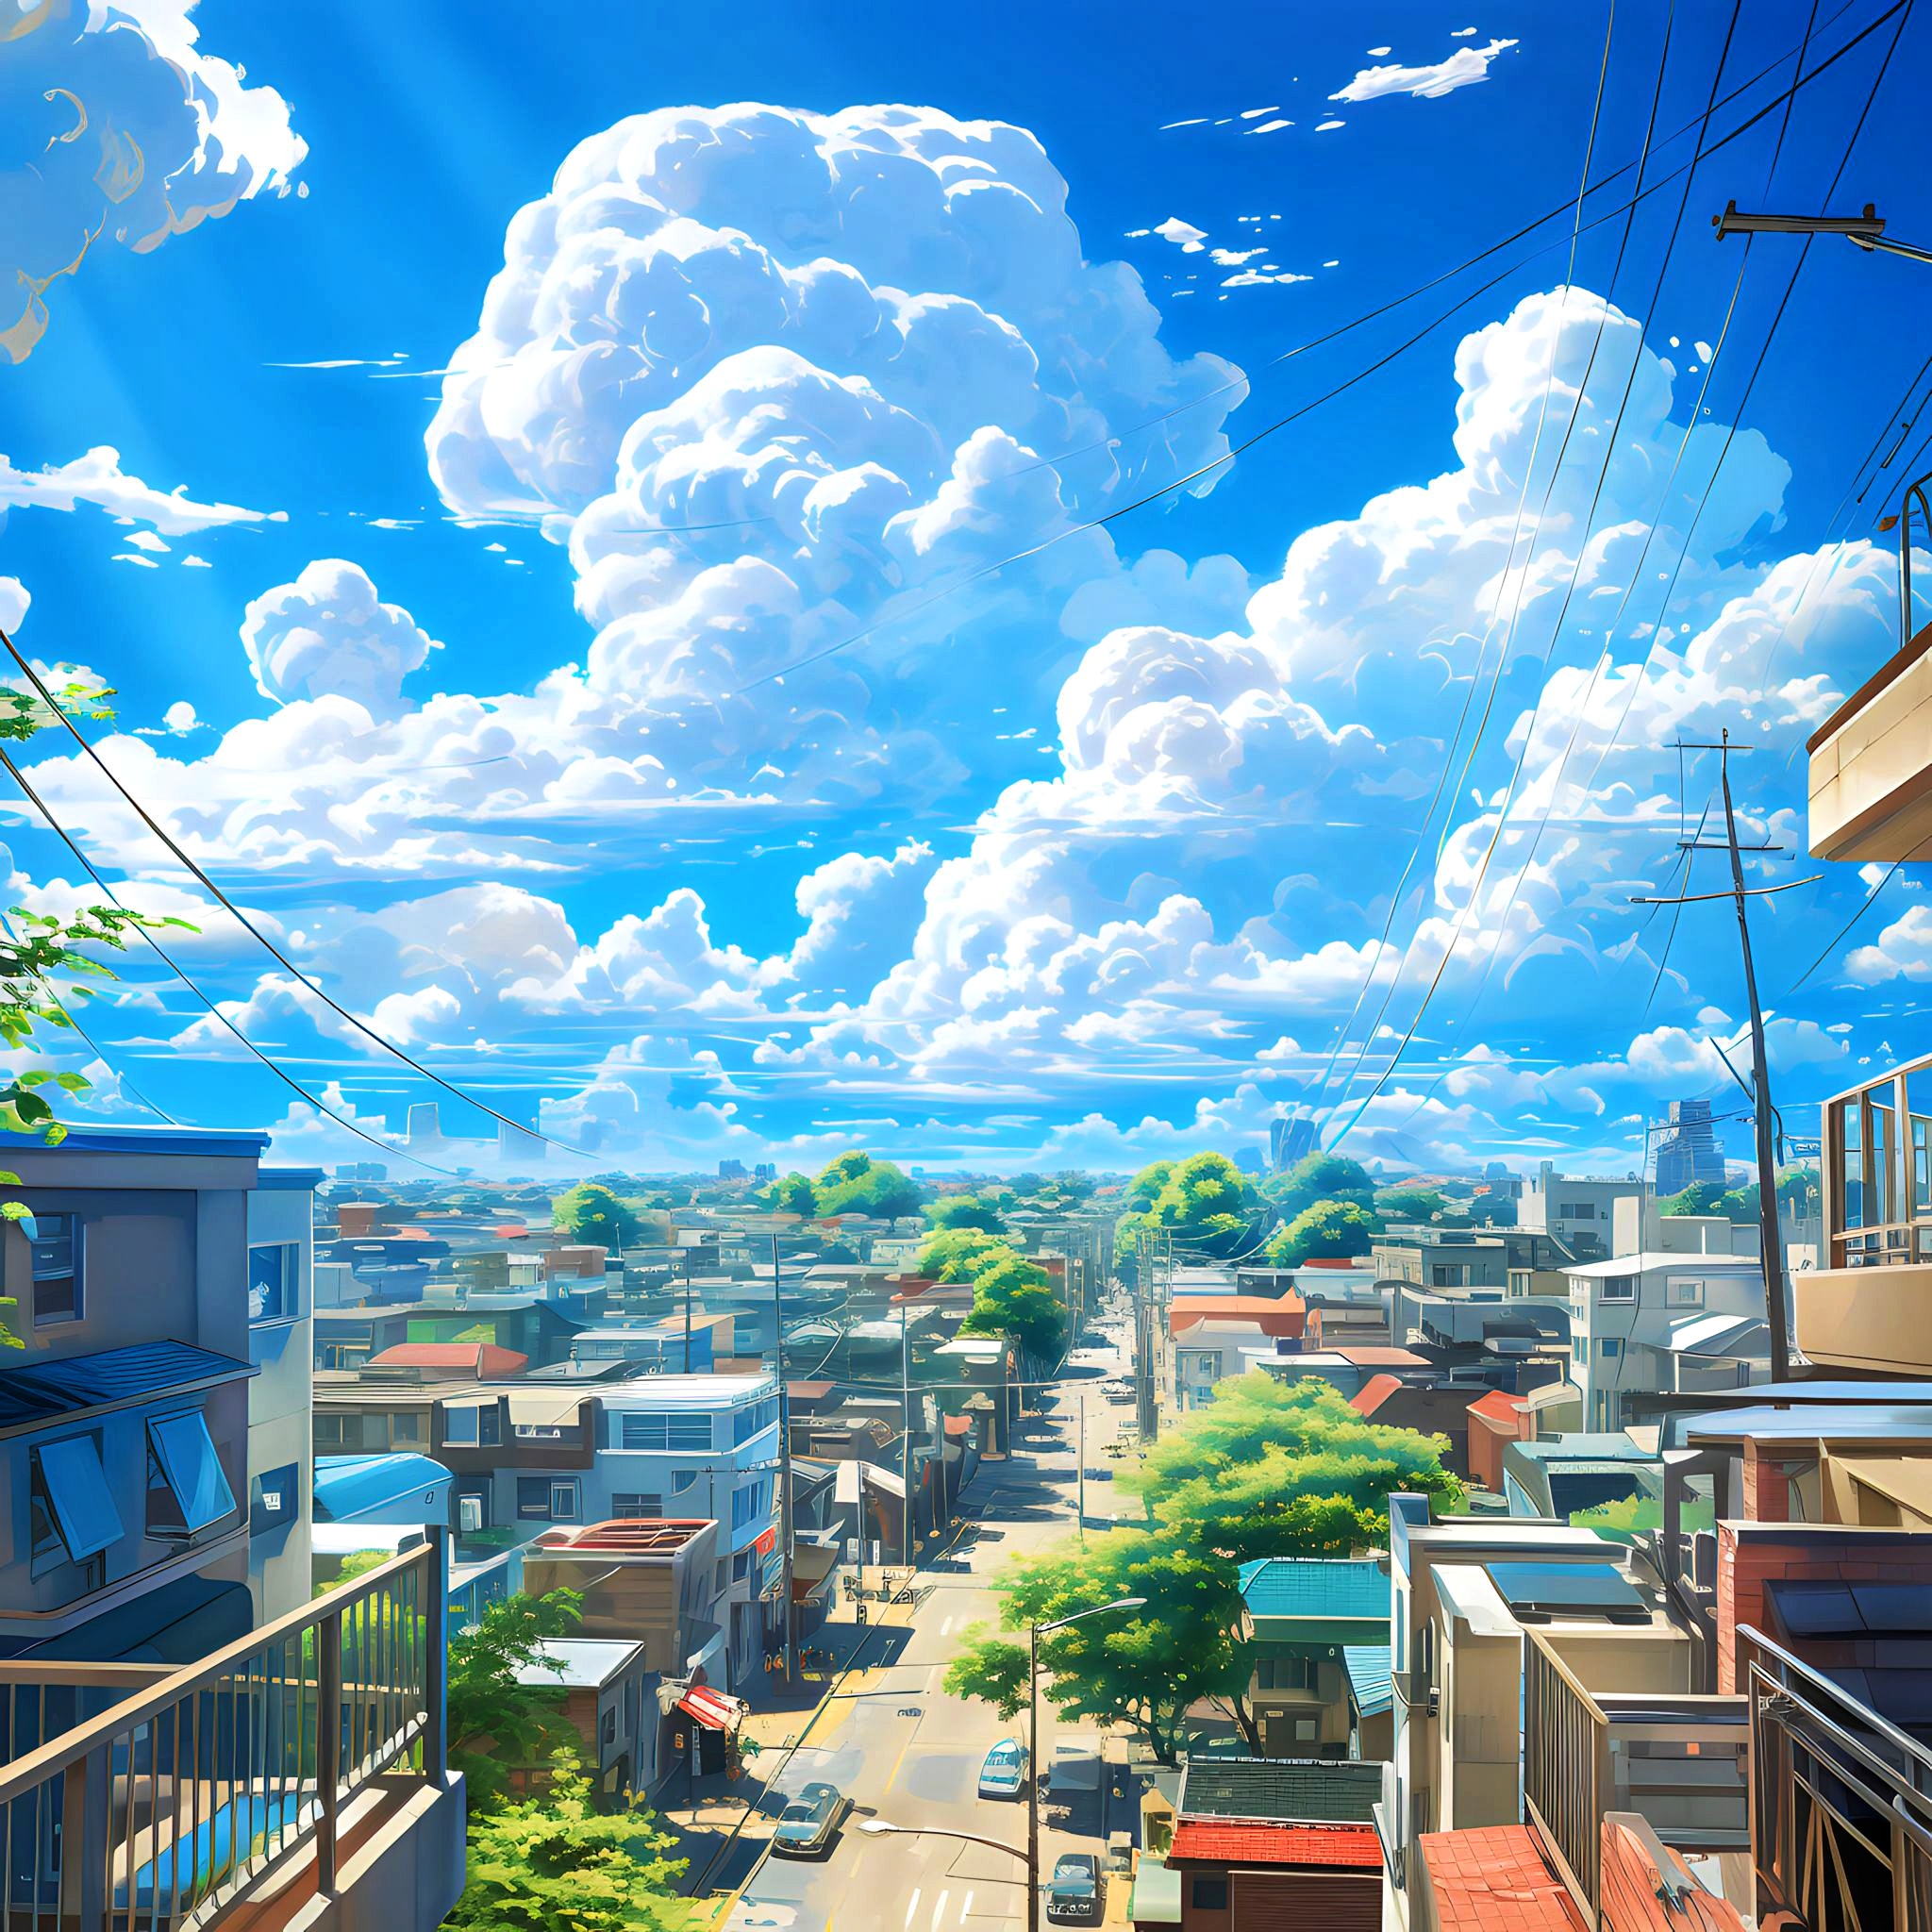 Anime Village by SilentEmotionn on DeviantArt